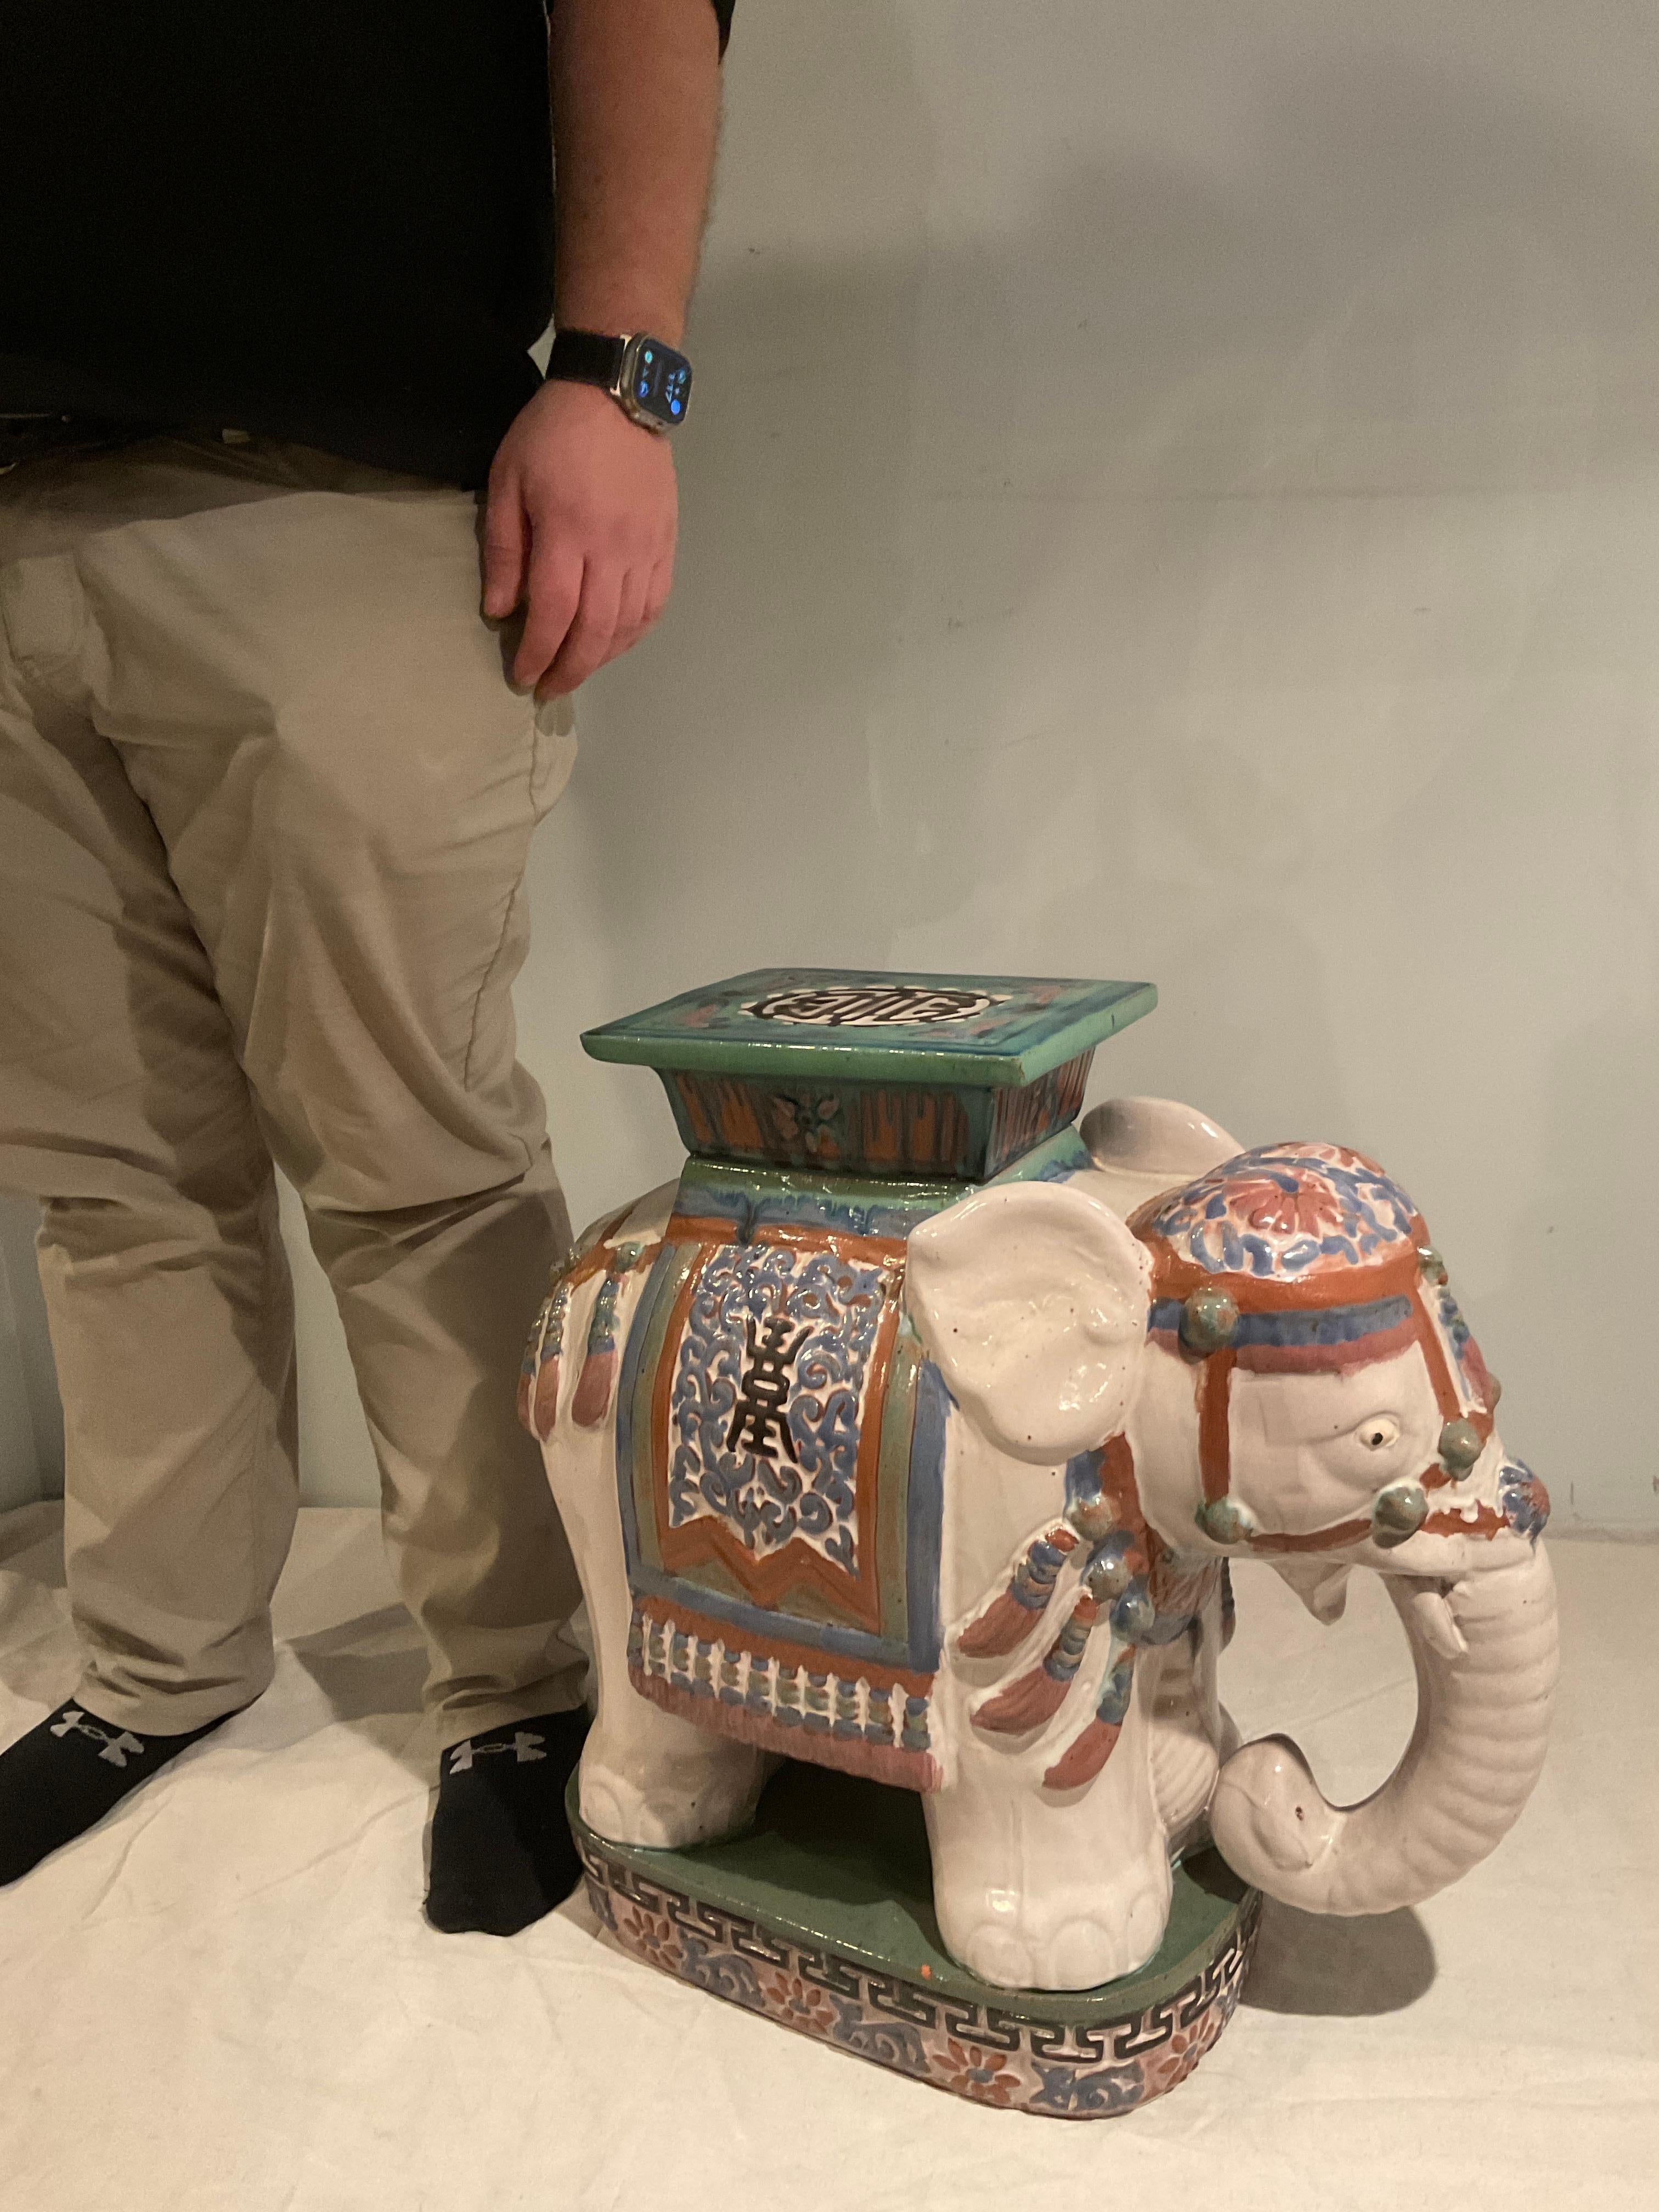 1970s Terracotta elephant garden stool / side table.
Hand painted.
